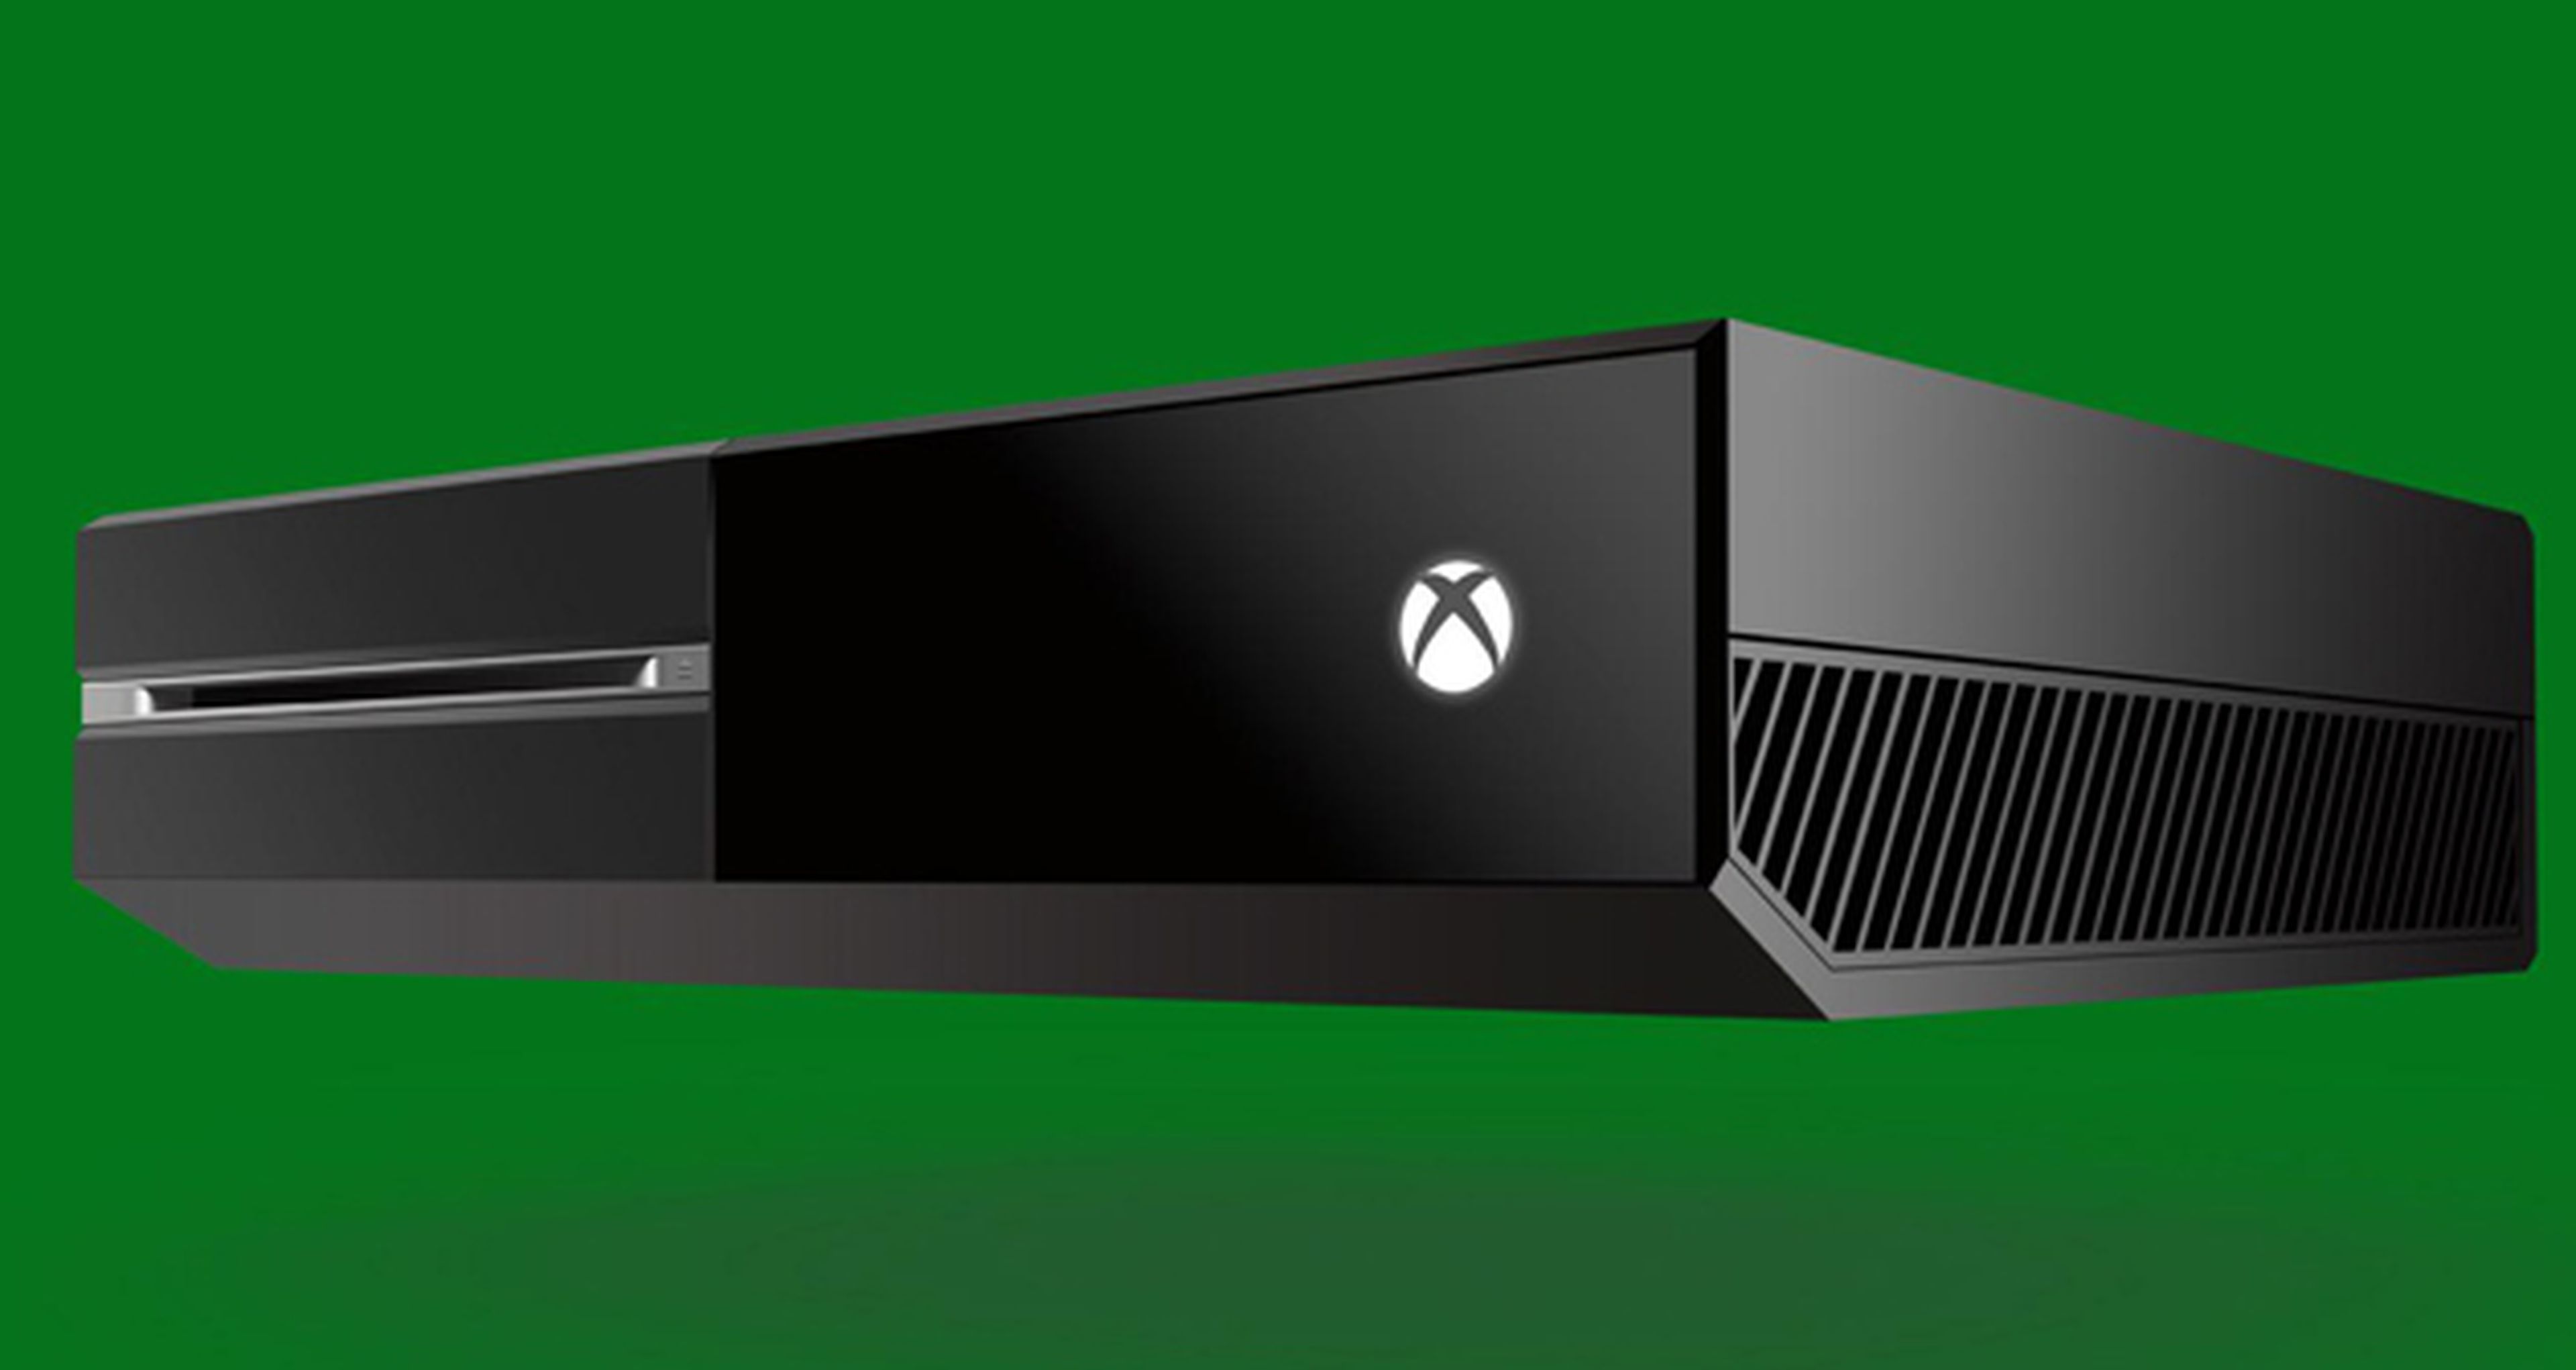 Chris Lewis, jefe de Xbox en Europa, abandona Microsoft